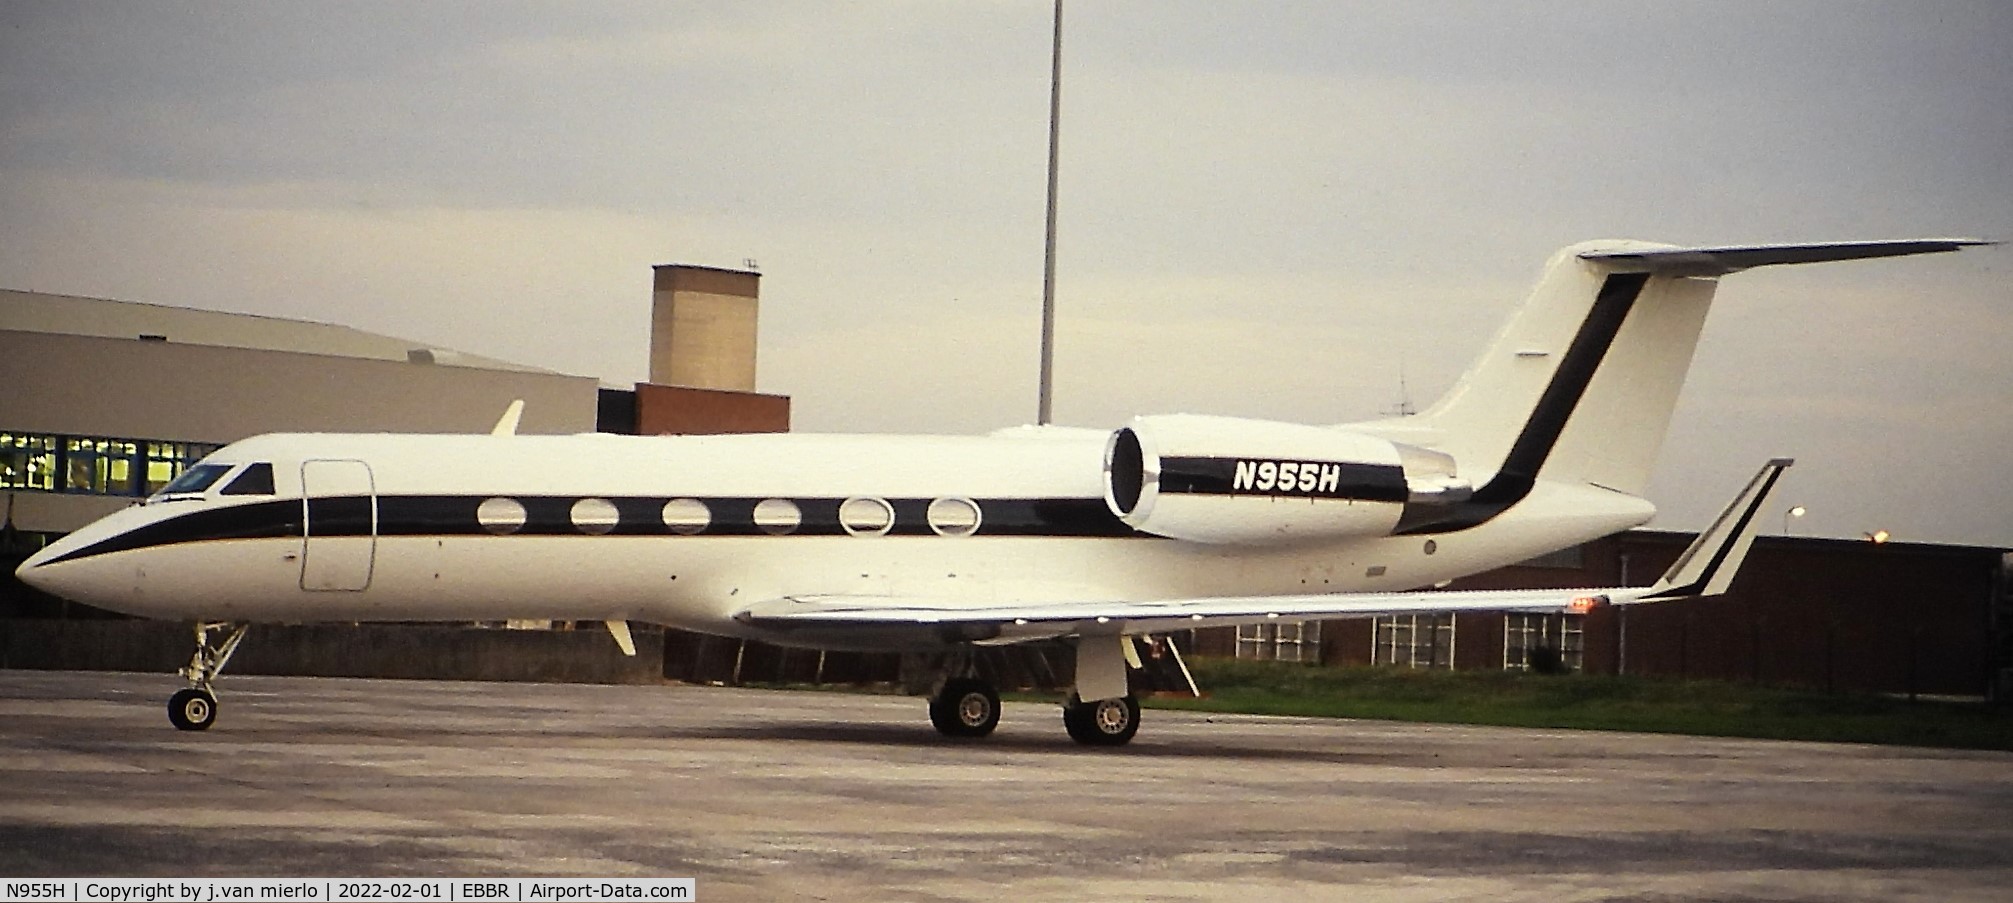 N955H, 1971 Grumman G-1159 Gulfstream II C/N 98, sSlide scan